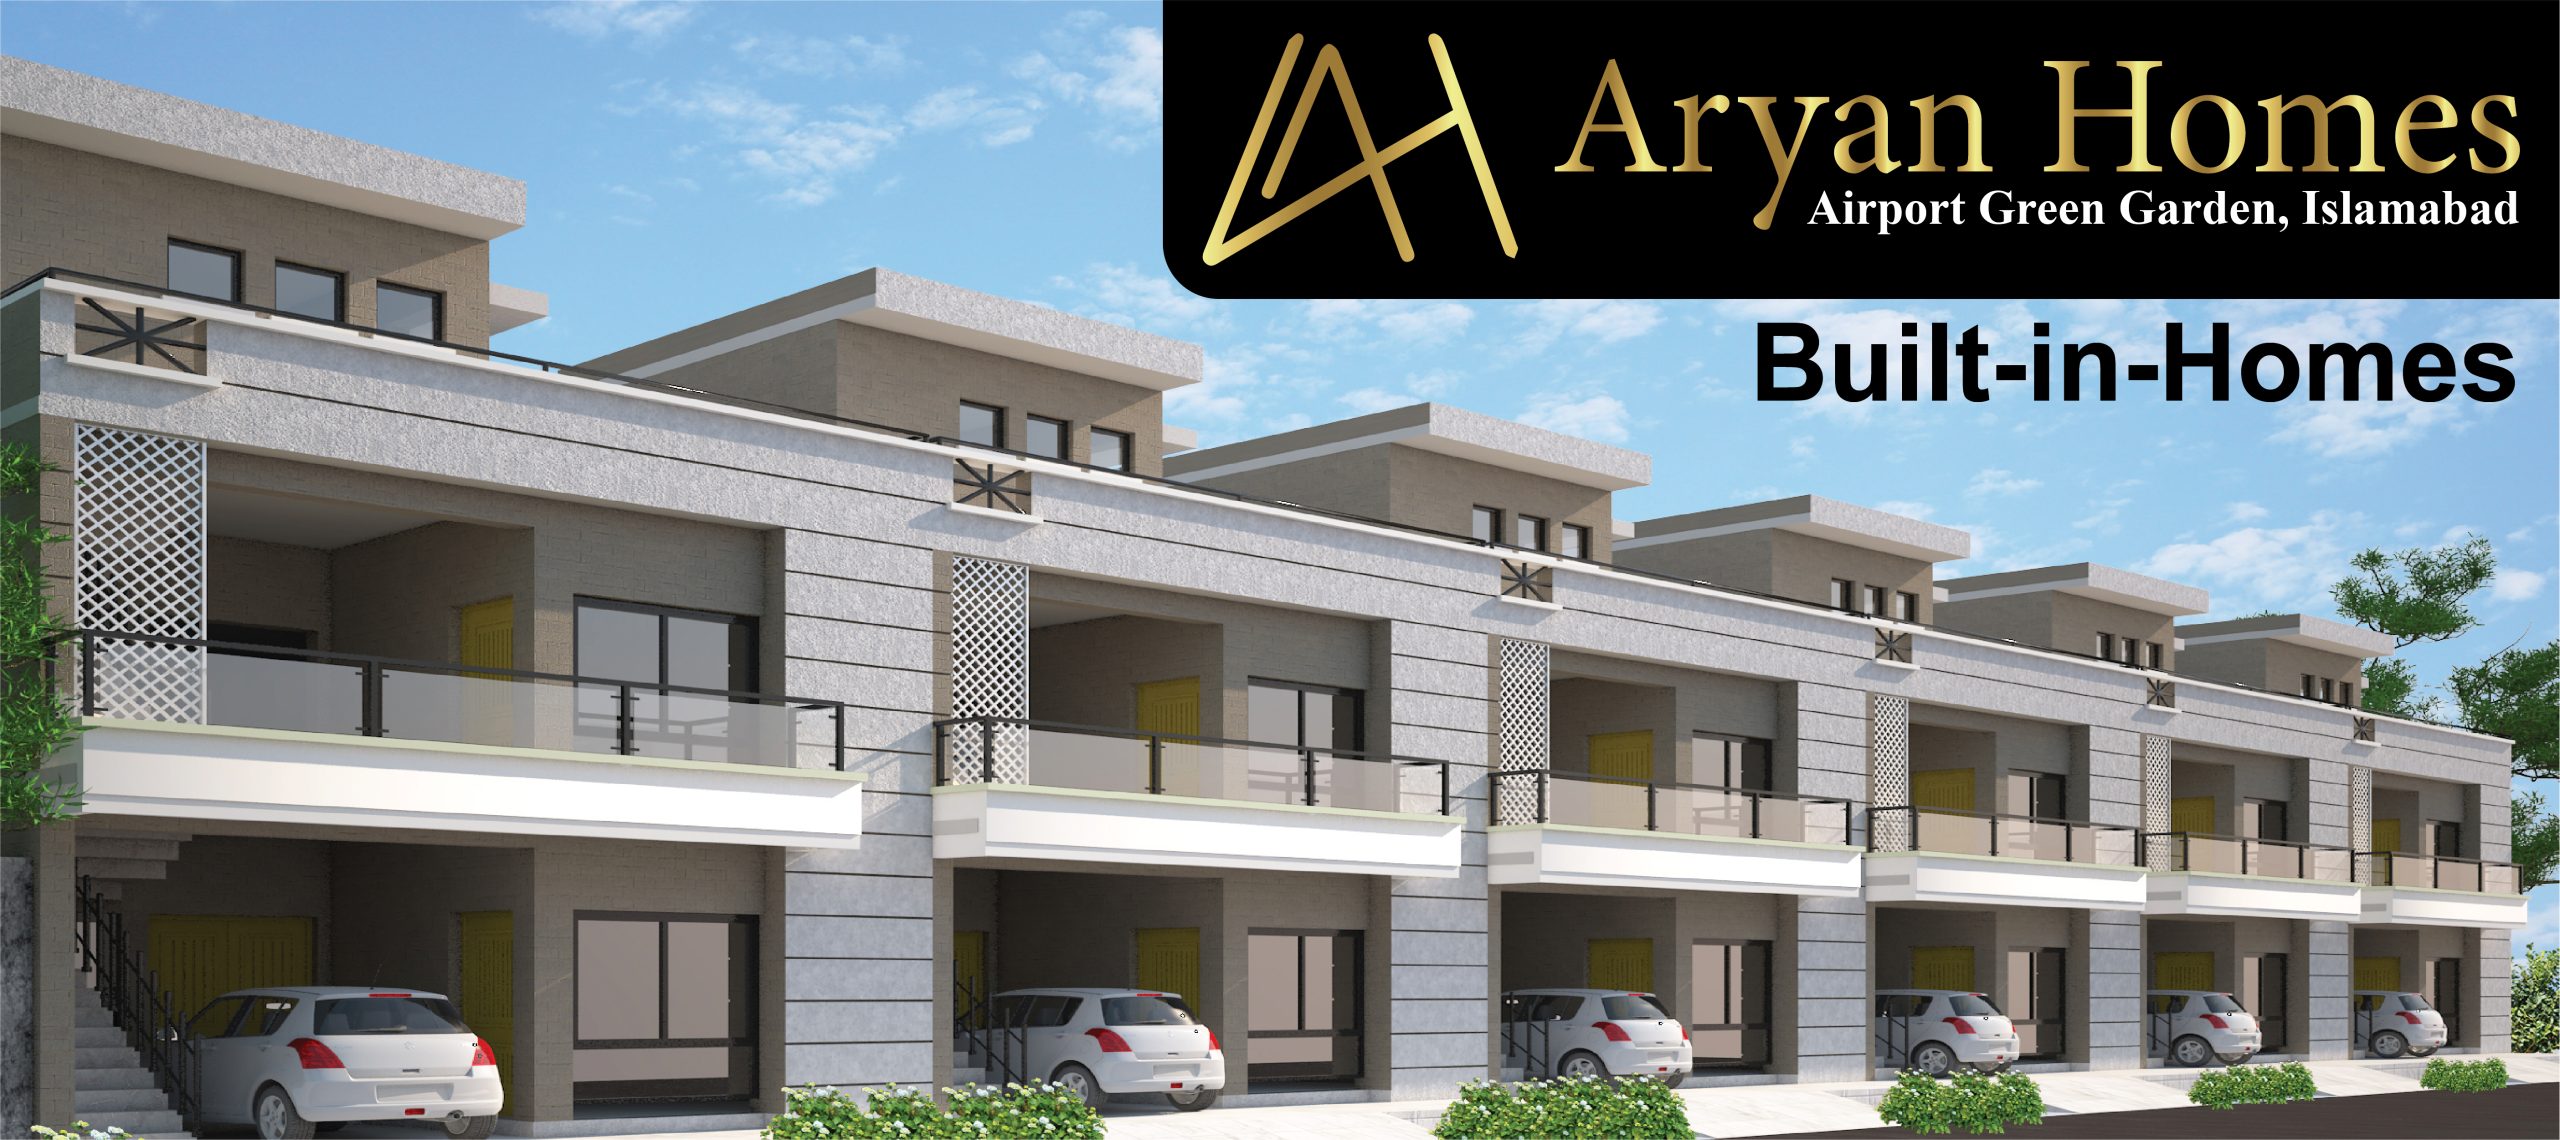 aryan homes islamabad, aryan homes, fast marketing online, fast marketing consultants,